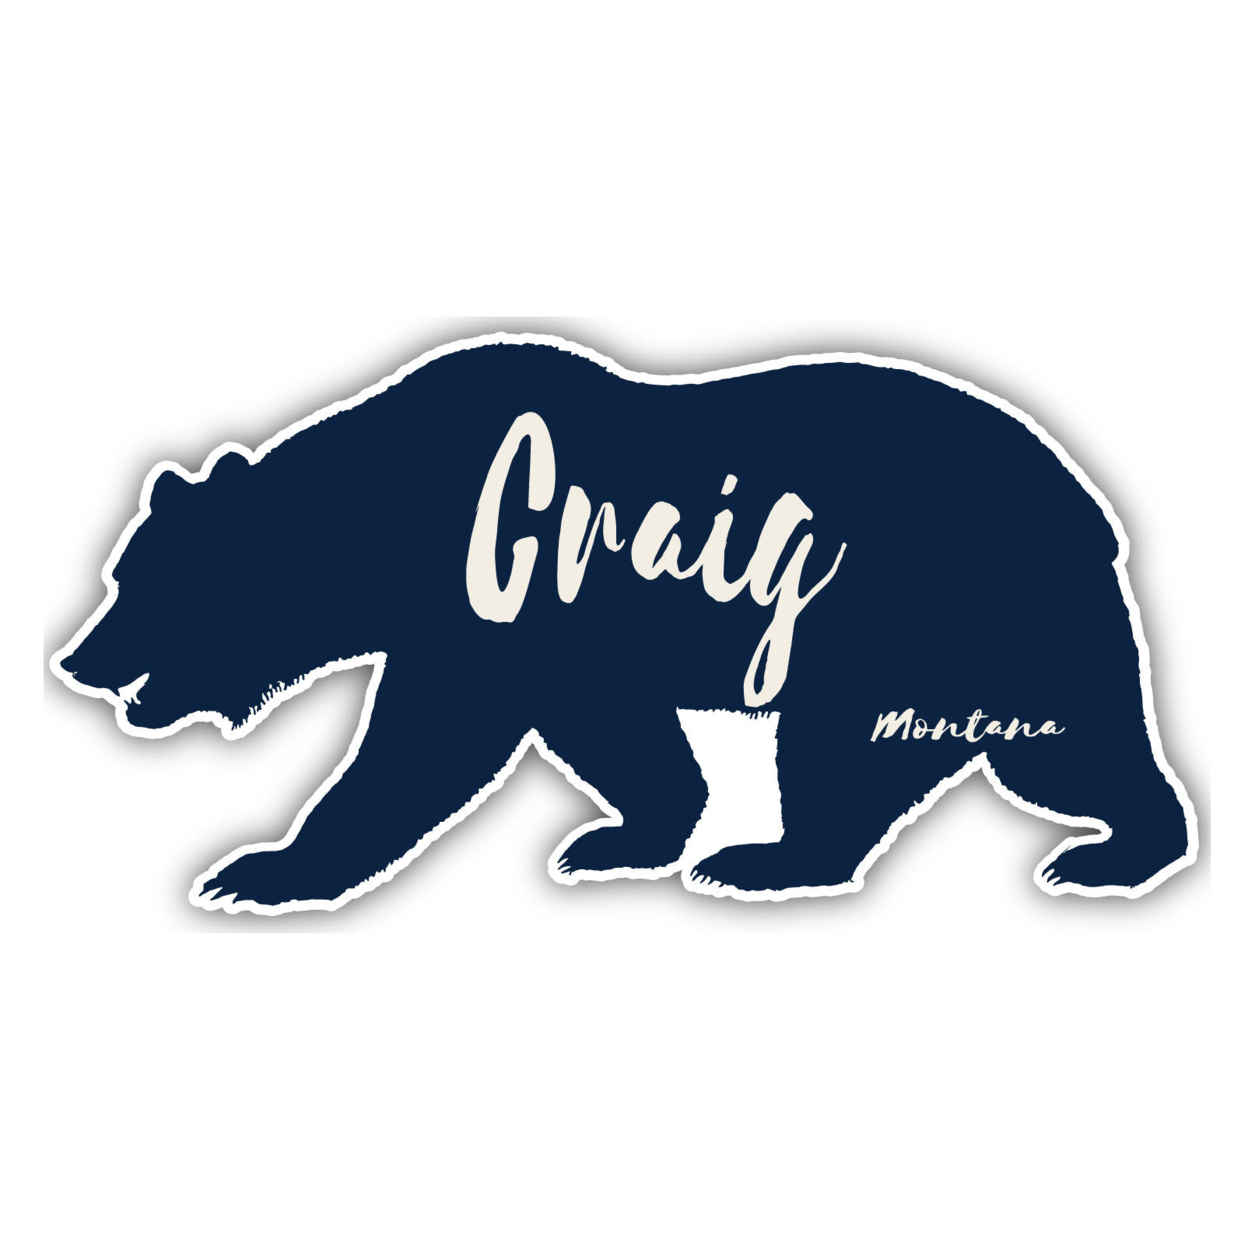 Craig Montana Souvenir Decorative Stickers (Choose Theme And Size) - 4-Pack, 12-Inch, Bear